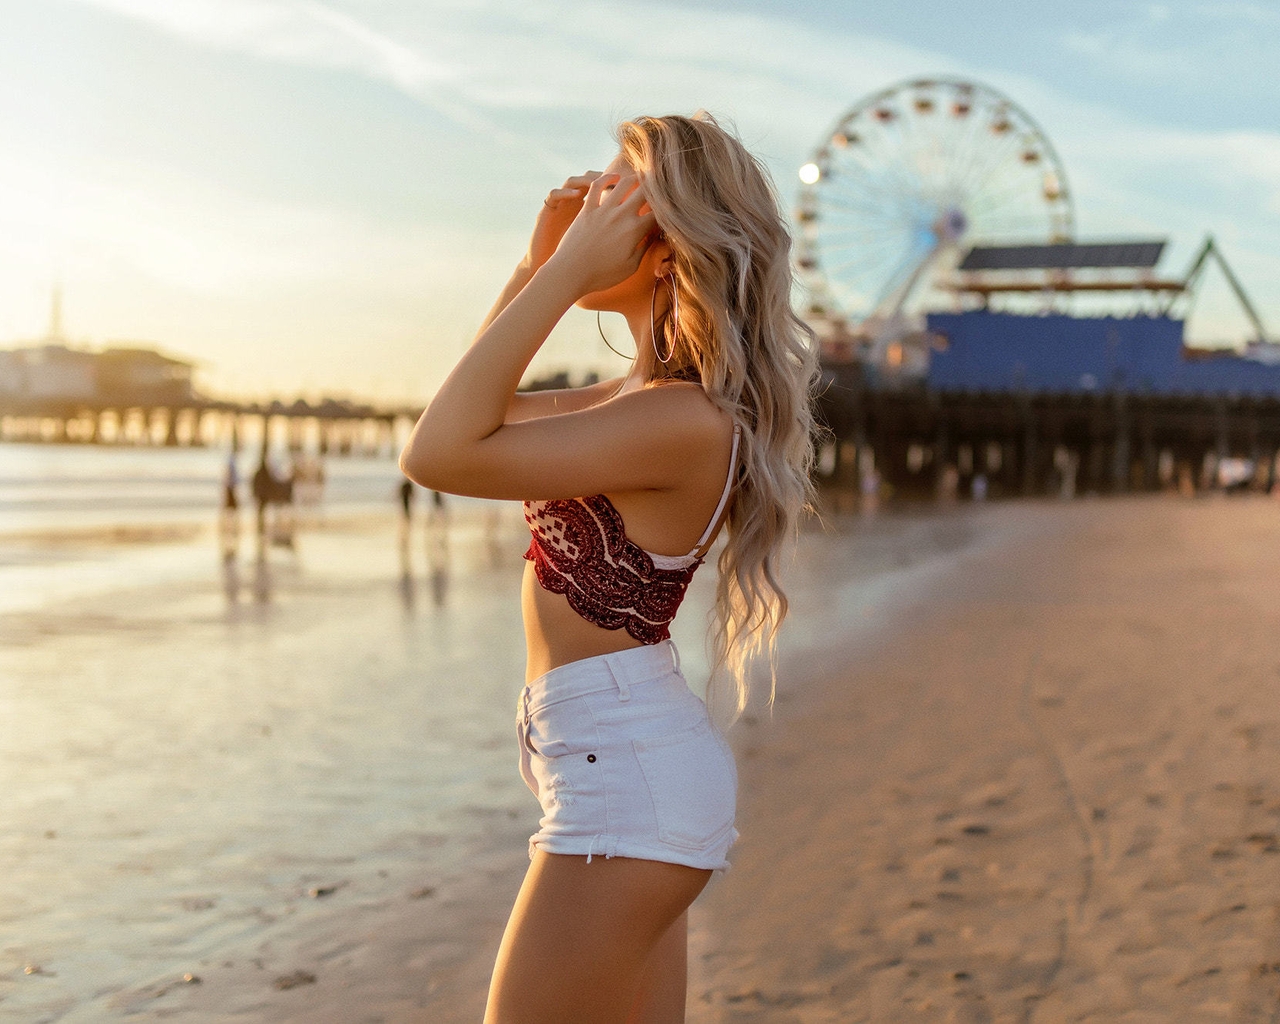 Image: girl, blonde, long hair, standing, watching, sand, beach, sunset